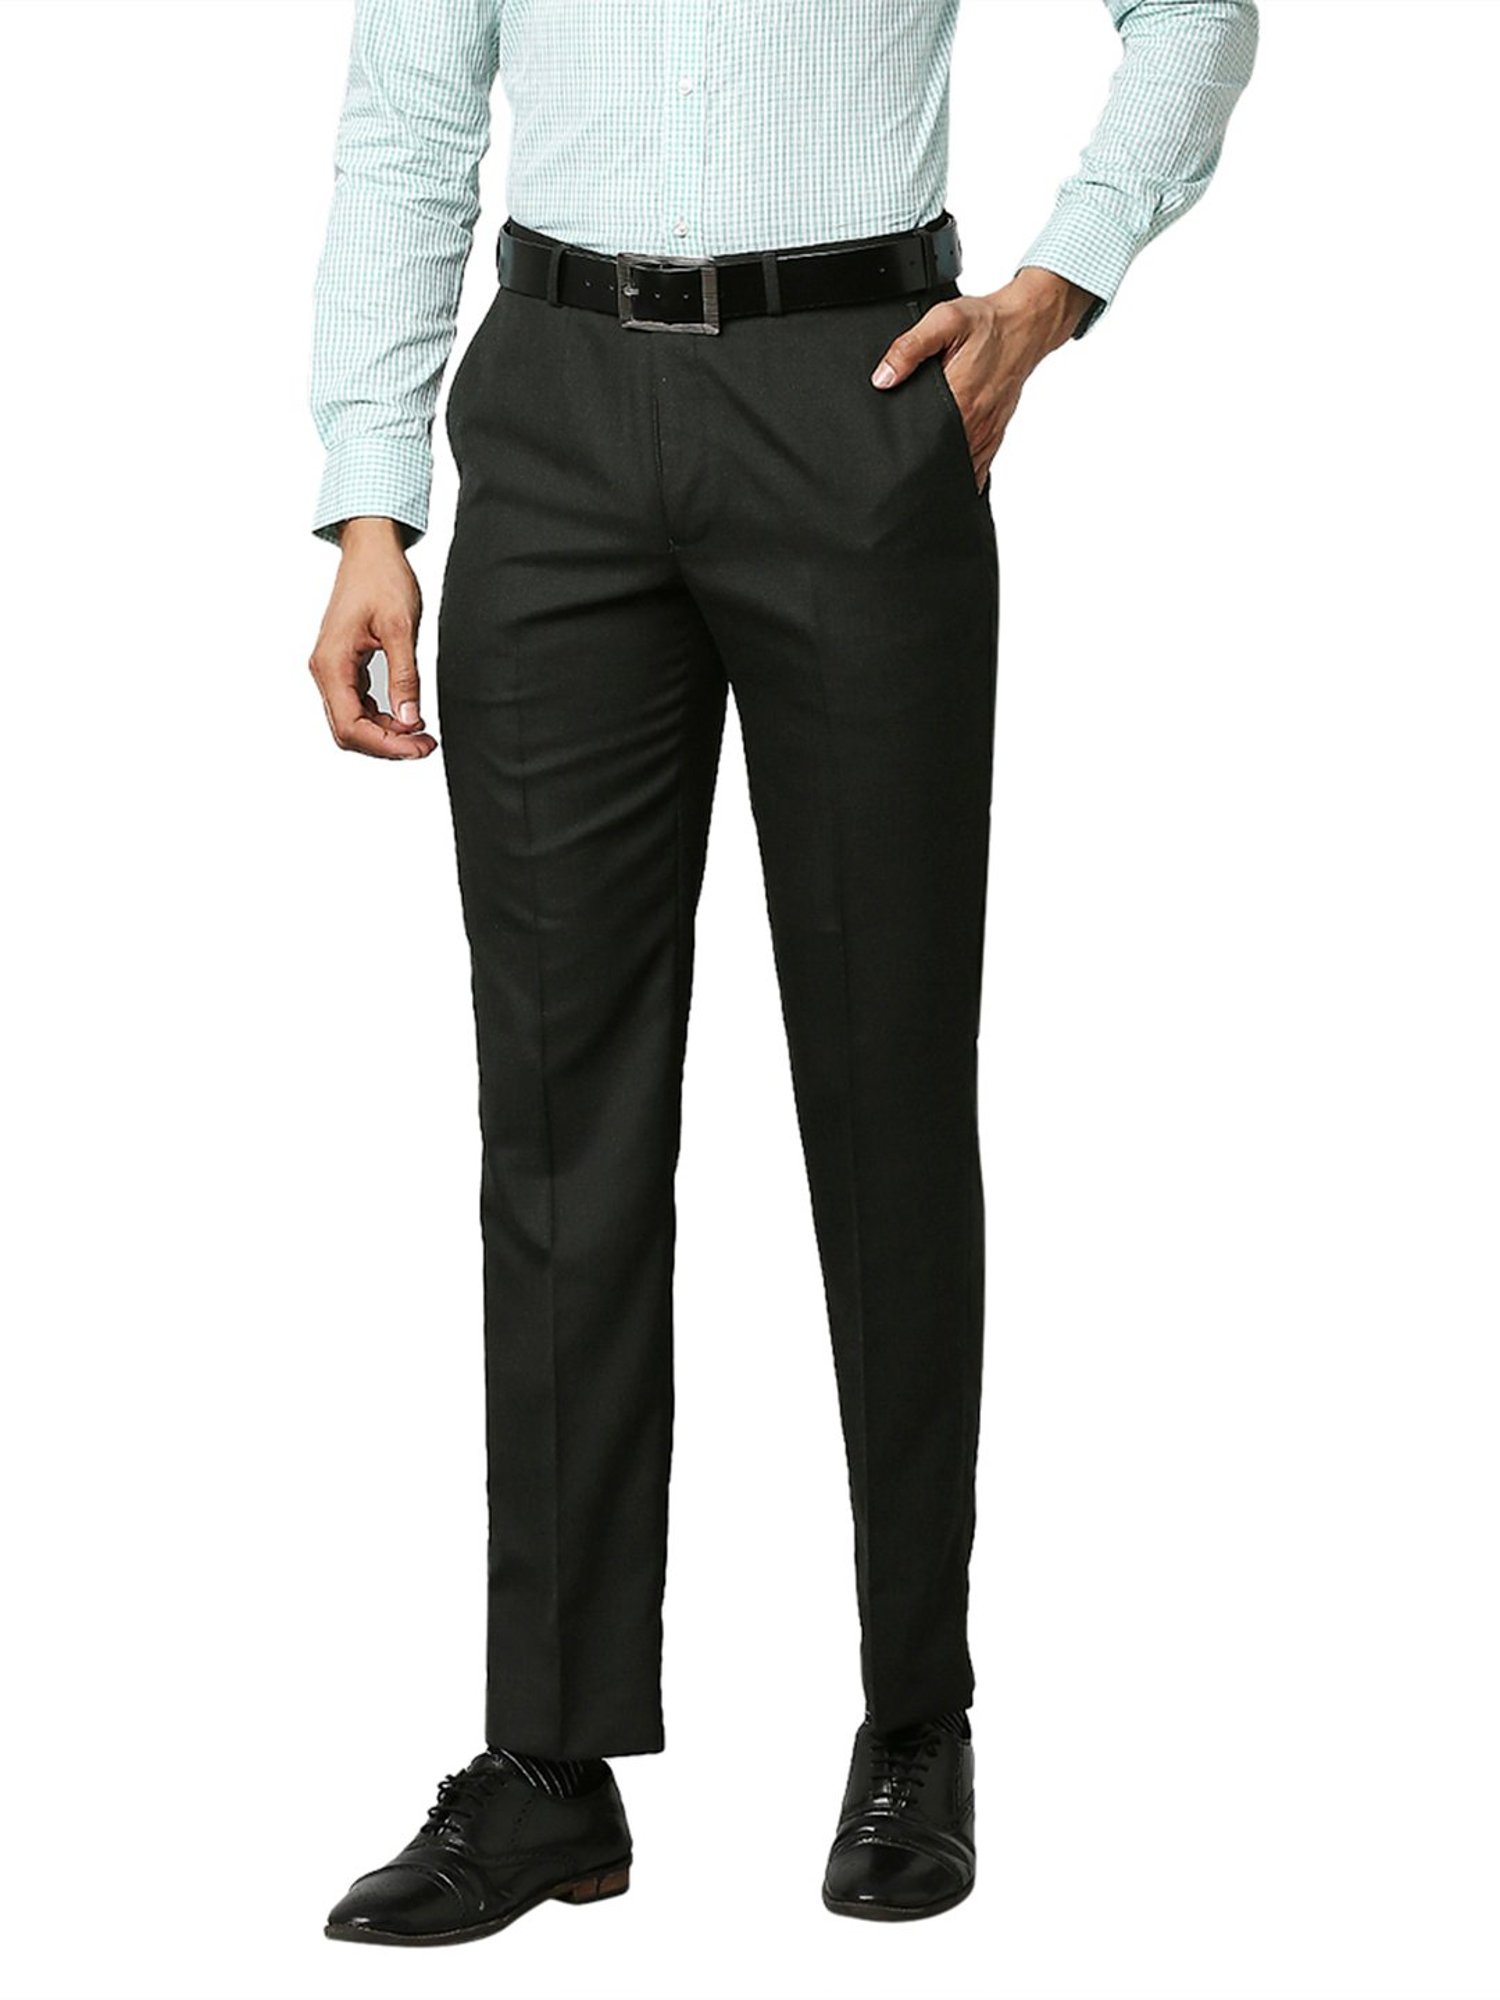 Buy Park Avenue Medium Fawn Trouser Size 30PMTX06579F5 at Amazonin